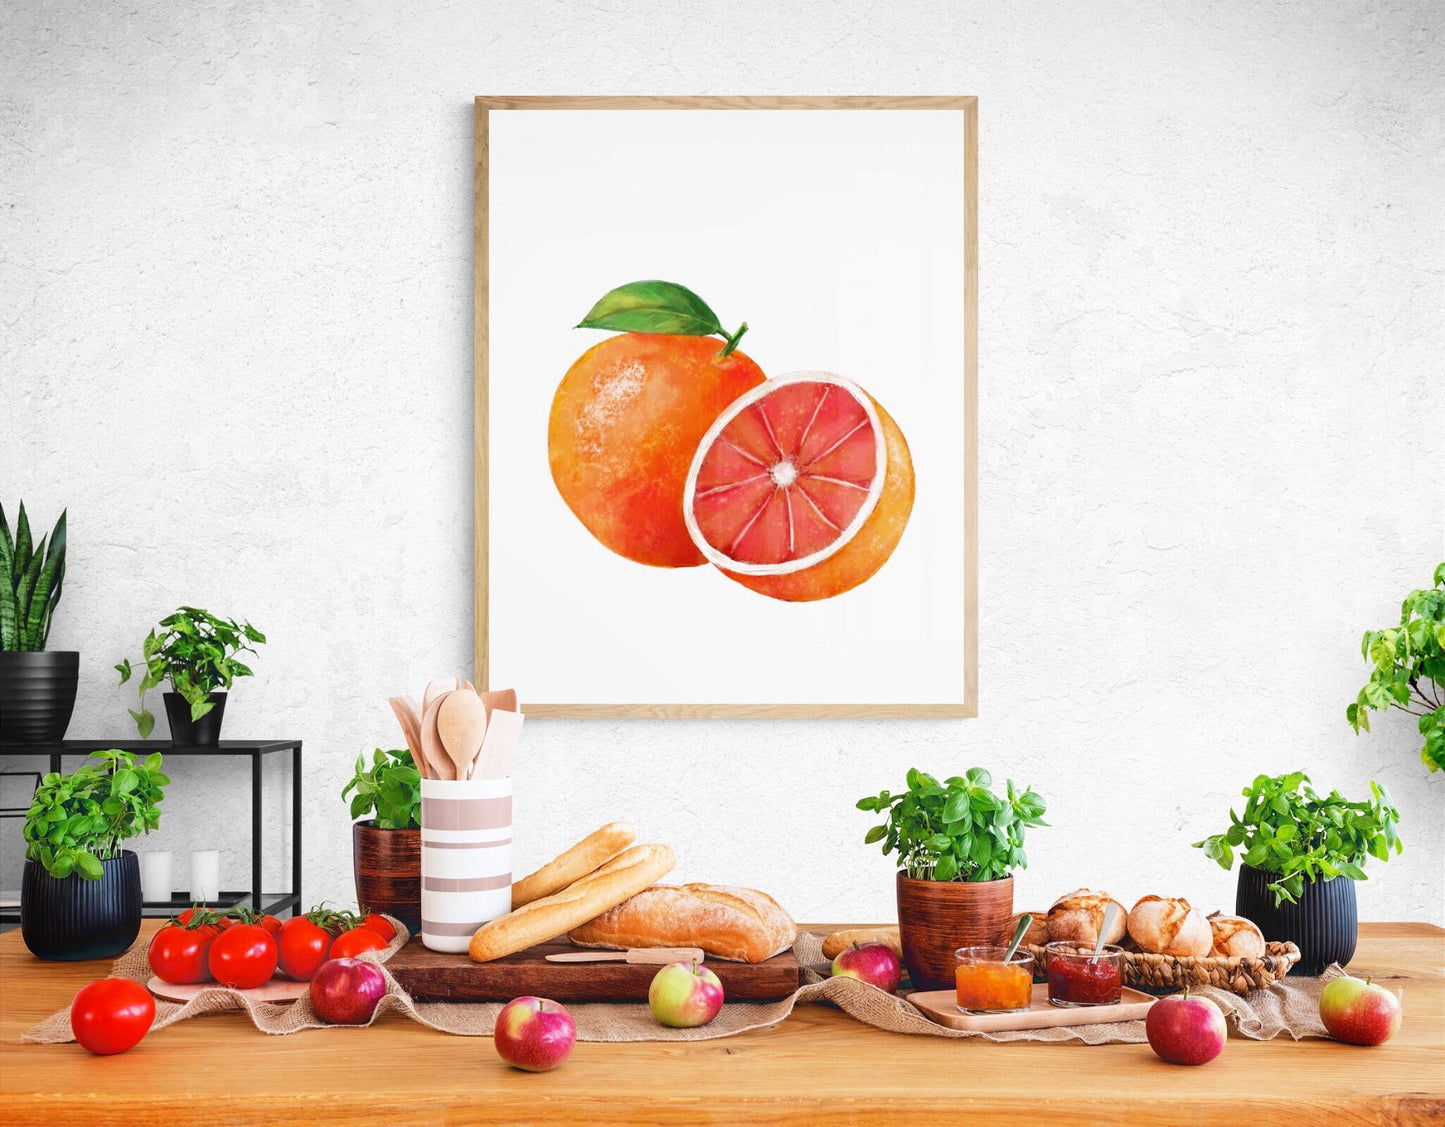 Blood Orange Art Print, Orange Wall Art, Kitchen Wall Hanging, Dining Room Decor, Citrus Painting, Fruit Illustration, Farmhouse Wall Decor